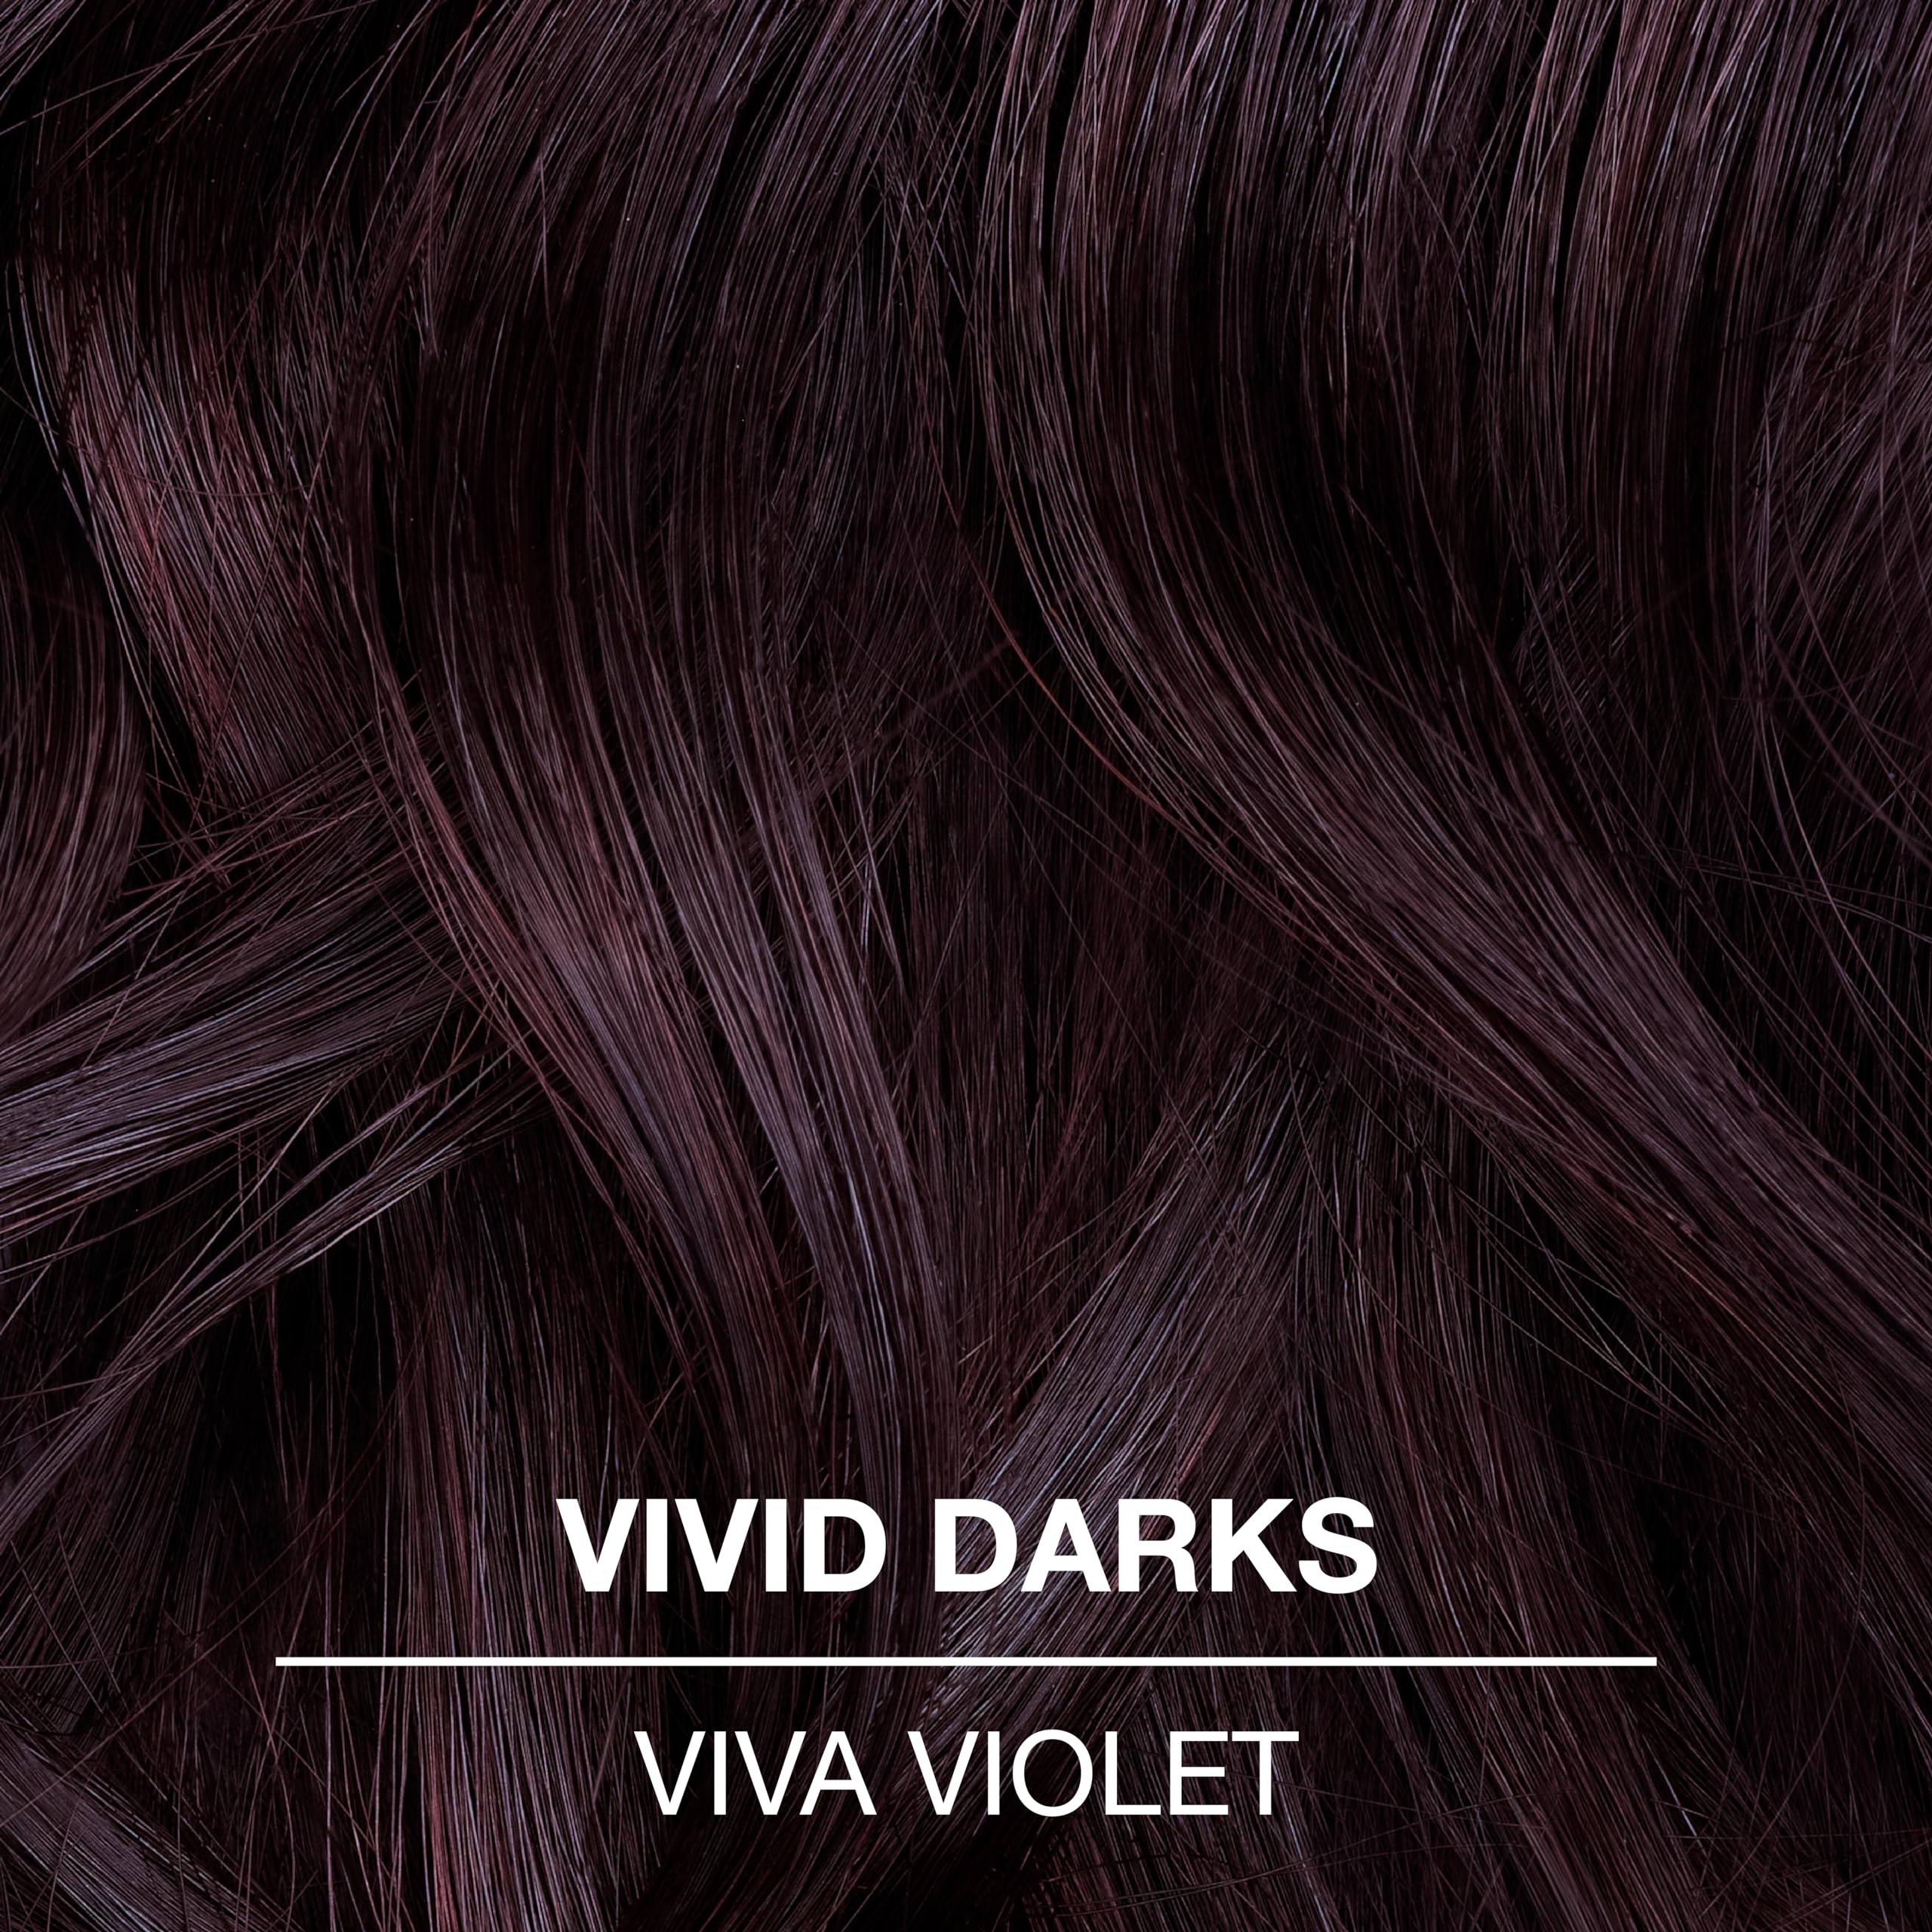 WELLA colorcharm VIVID DARKS Permanent Cream Color, Vibrant Color for Dark Hair, Nourishing Vegan Formula, No Bleach Needed, Viva Violet